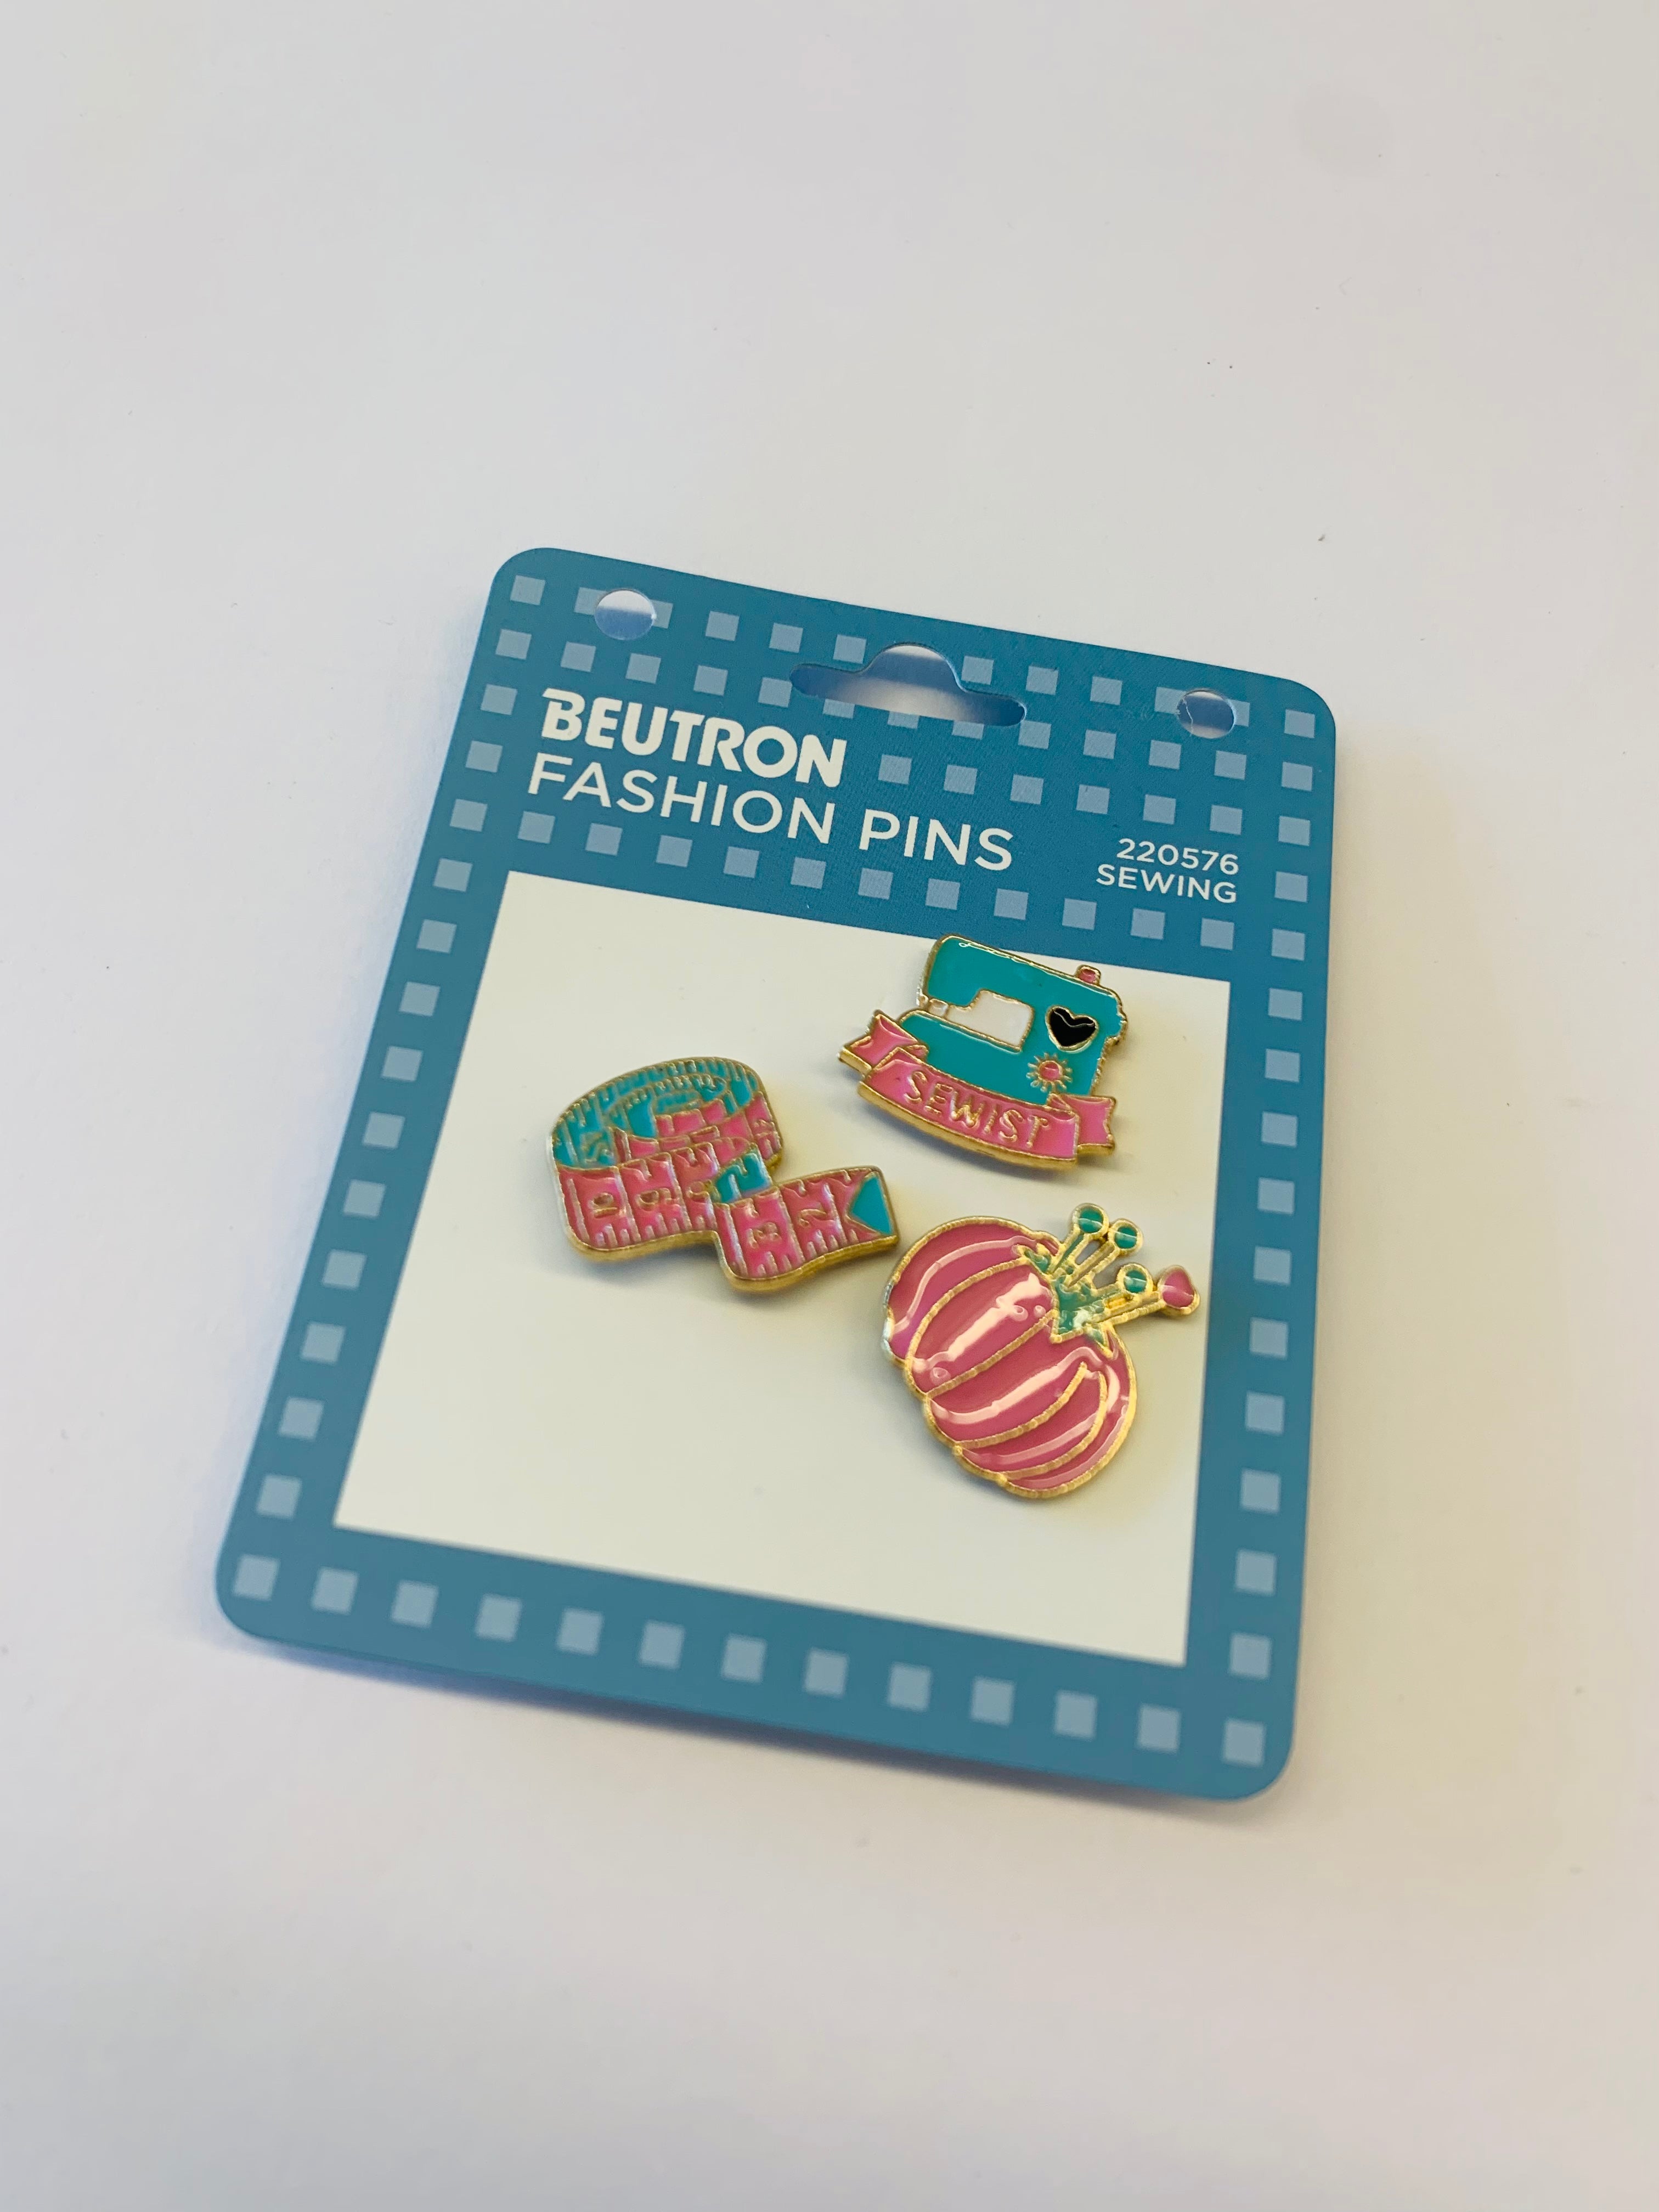 Beutron fashion pins